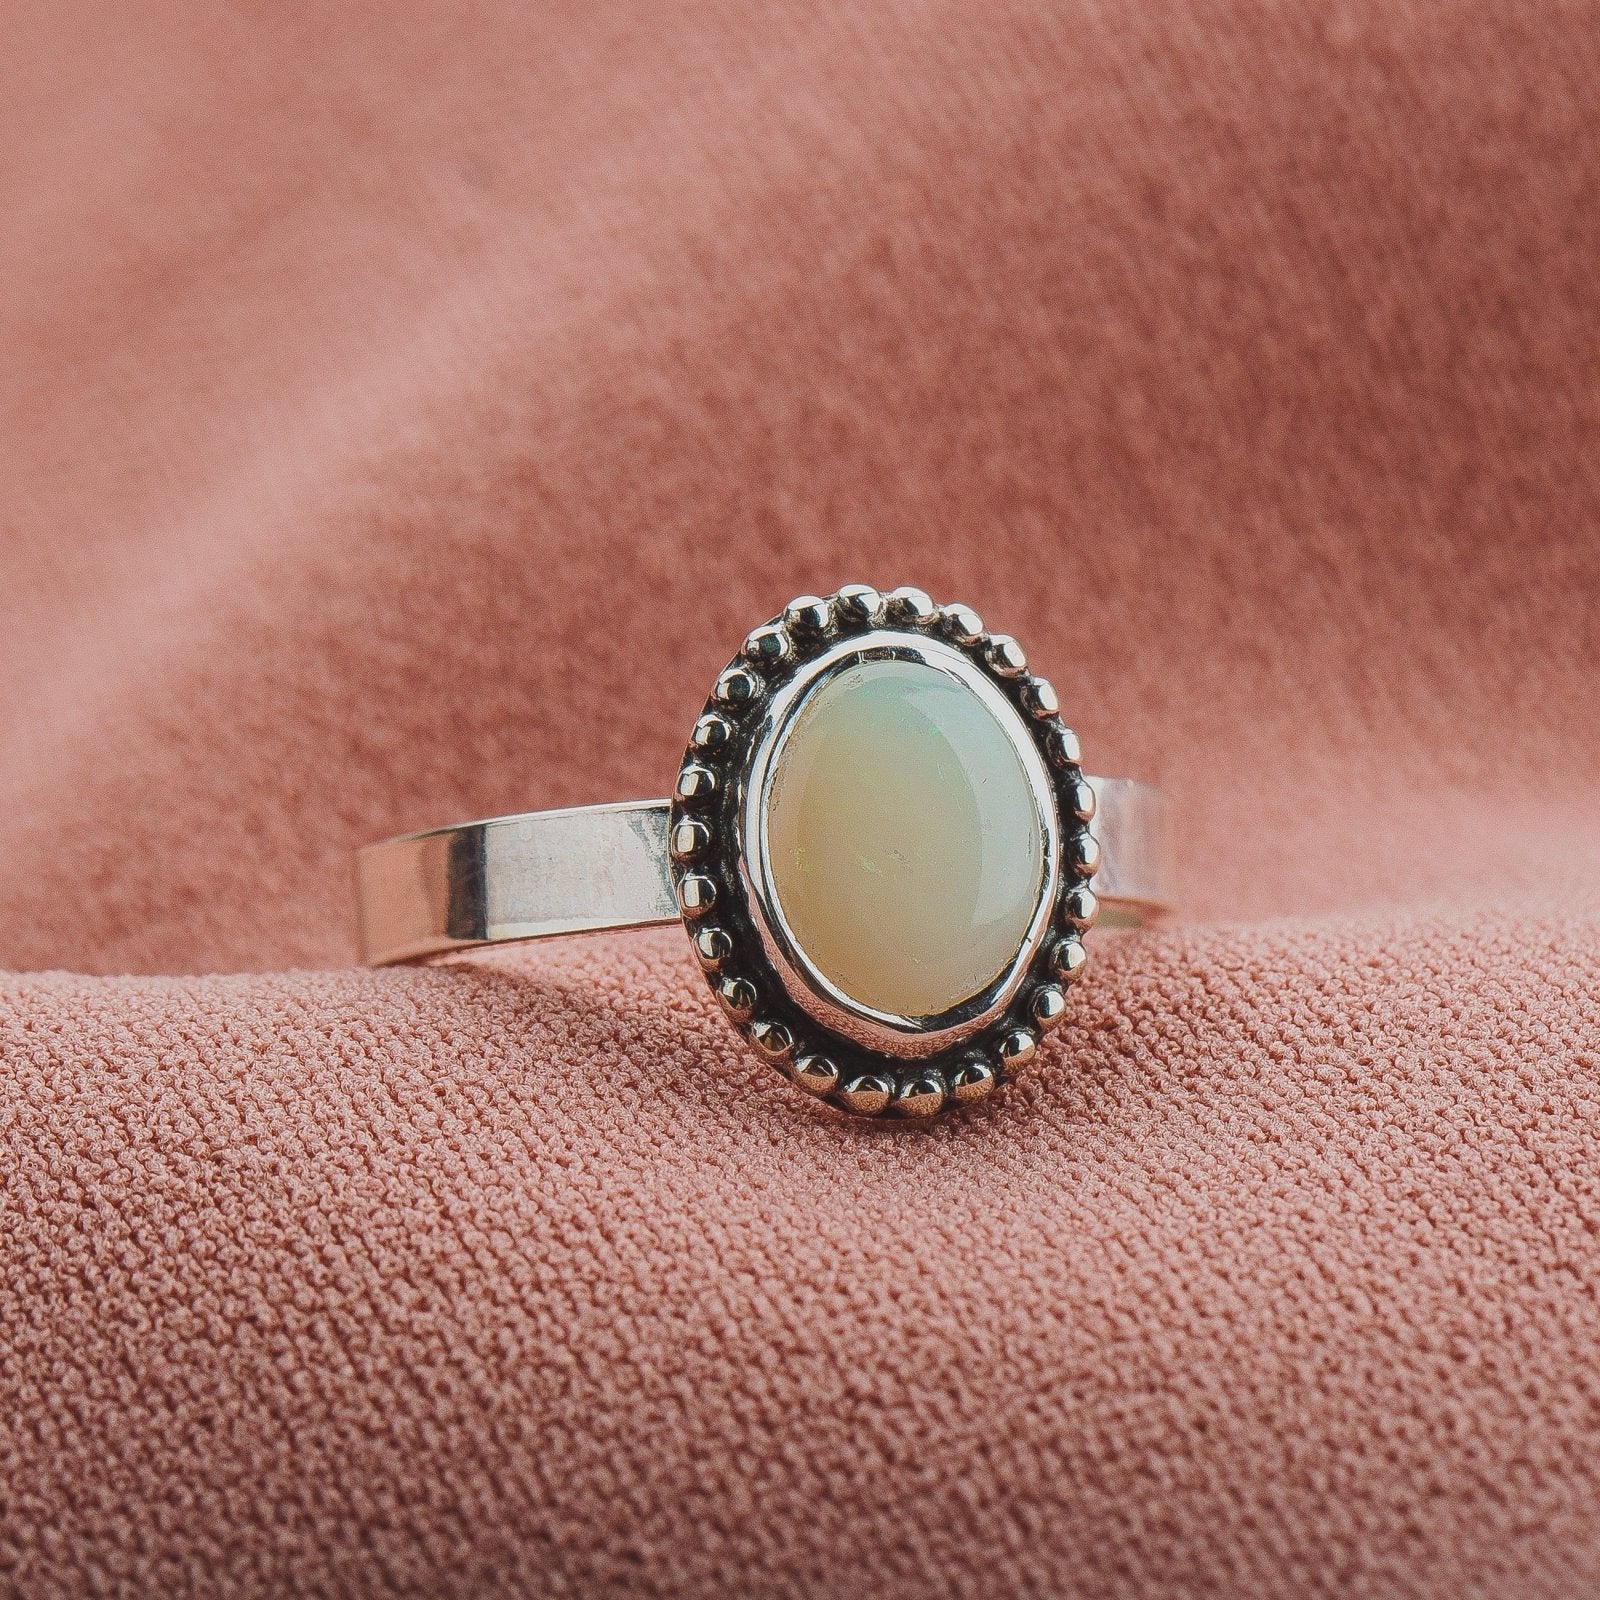 Size 7.25 Opal Ring - Melanie Golden Jewelry - gemstone rings, rings